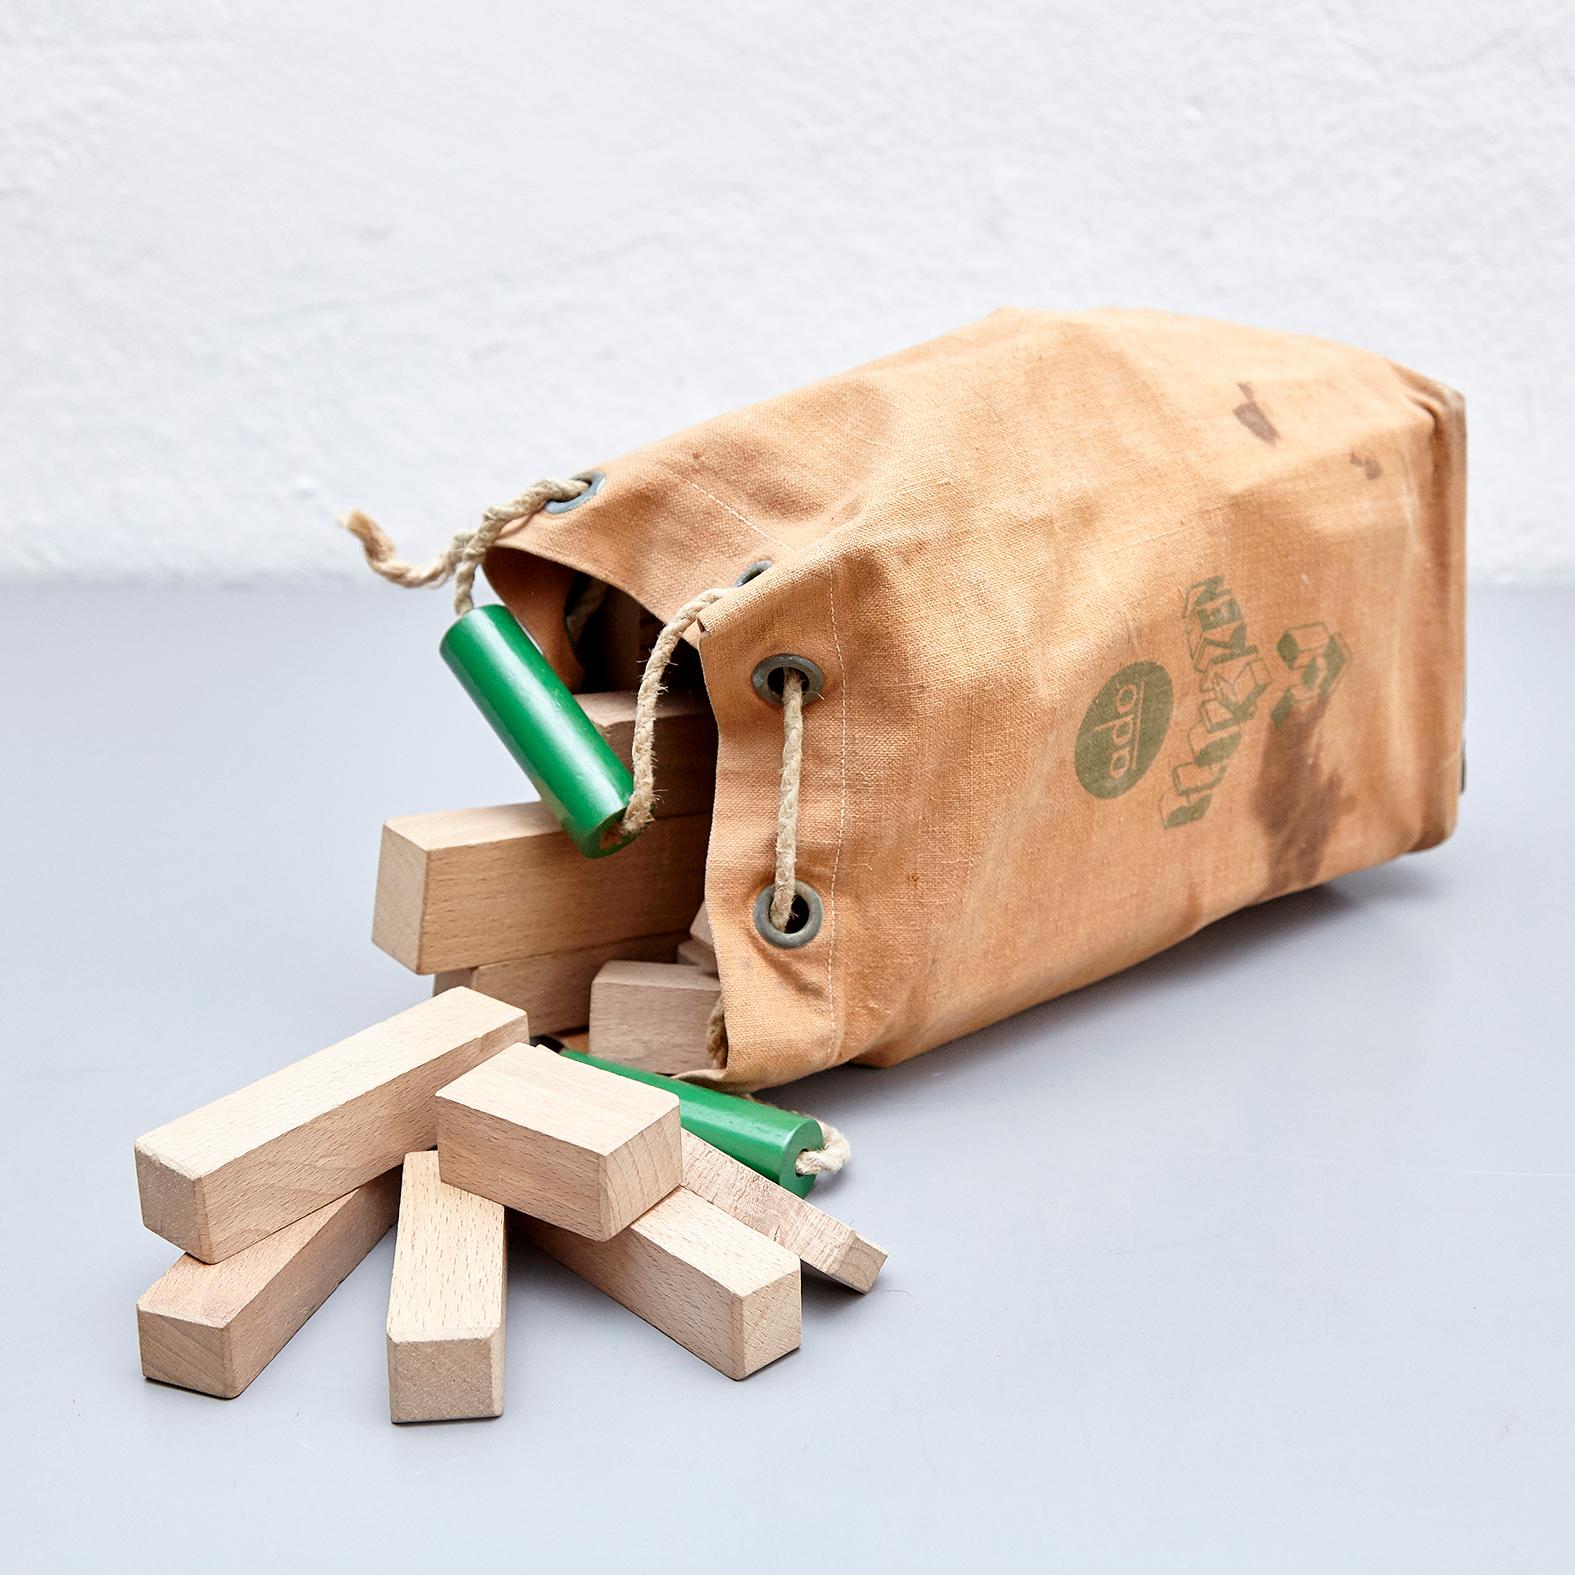 Mid-20th Century Ko Verzuu for Ado, Mid-Century Modern, Wood Blocks Construction Netherlands Toy 